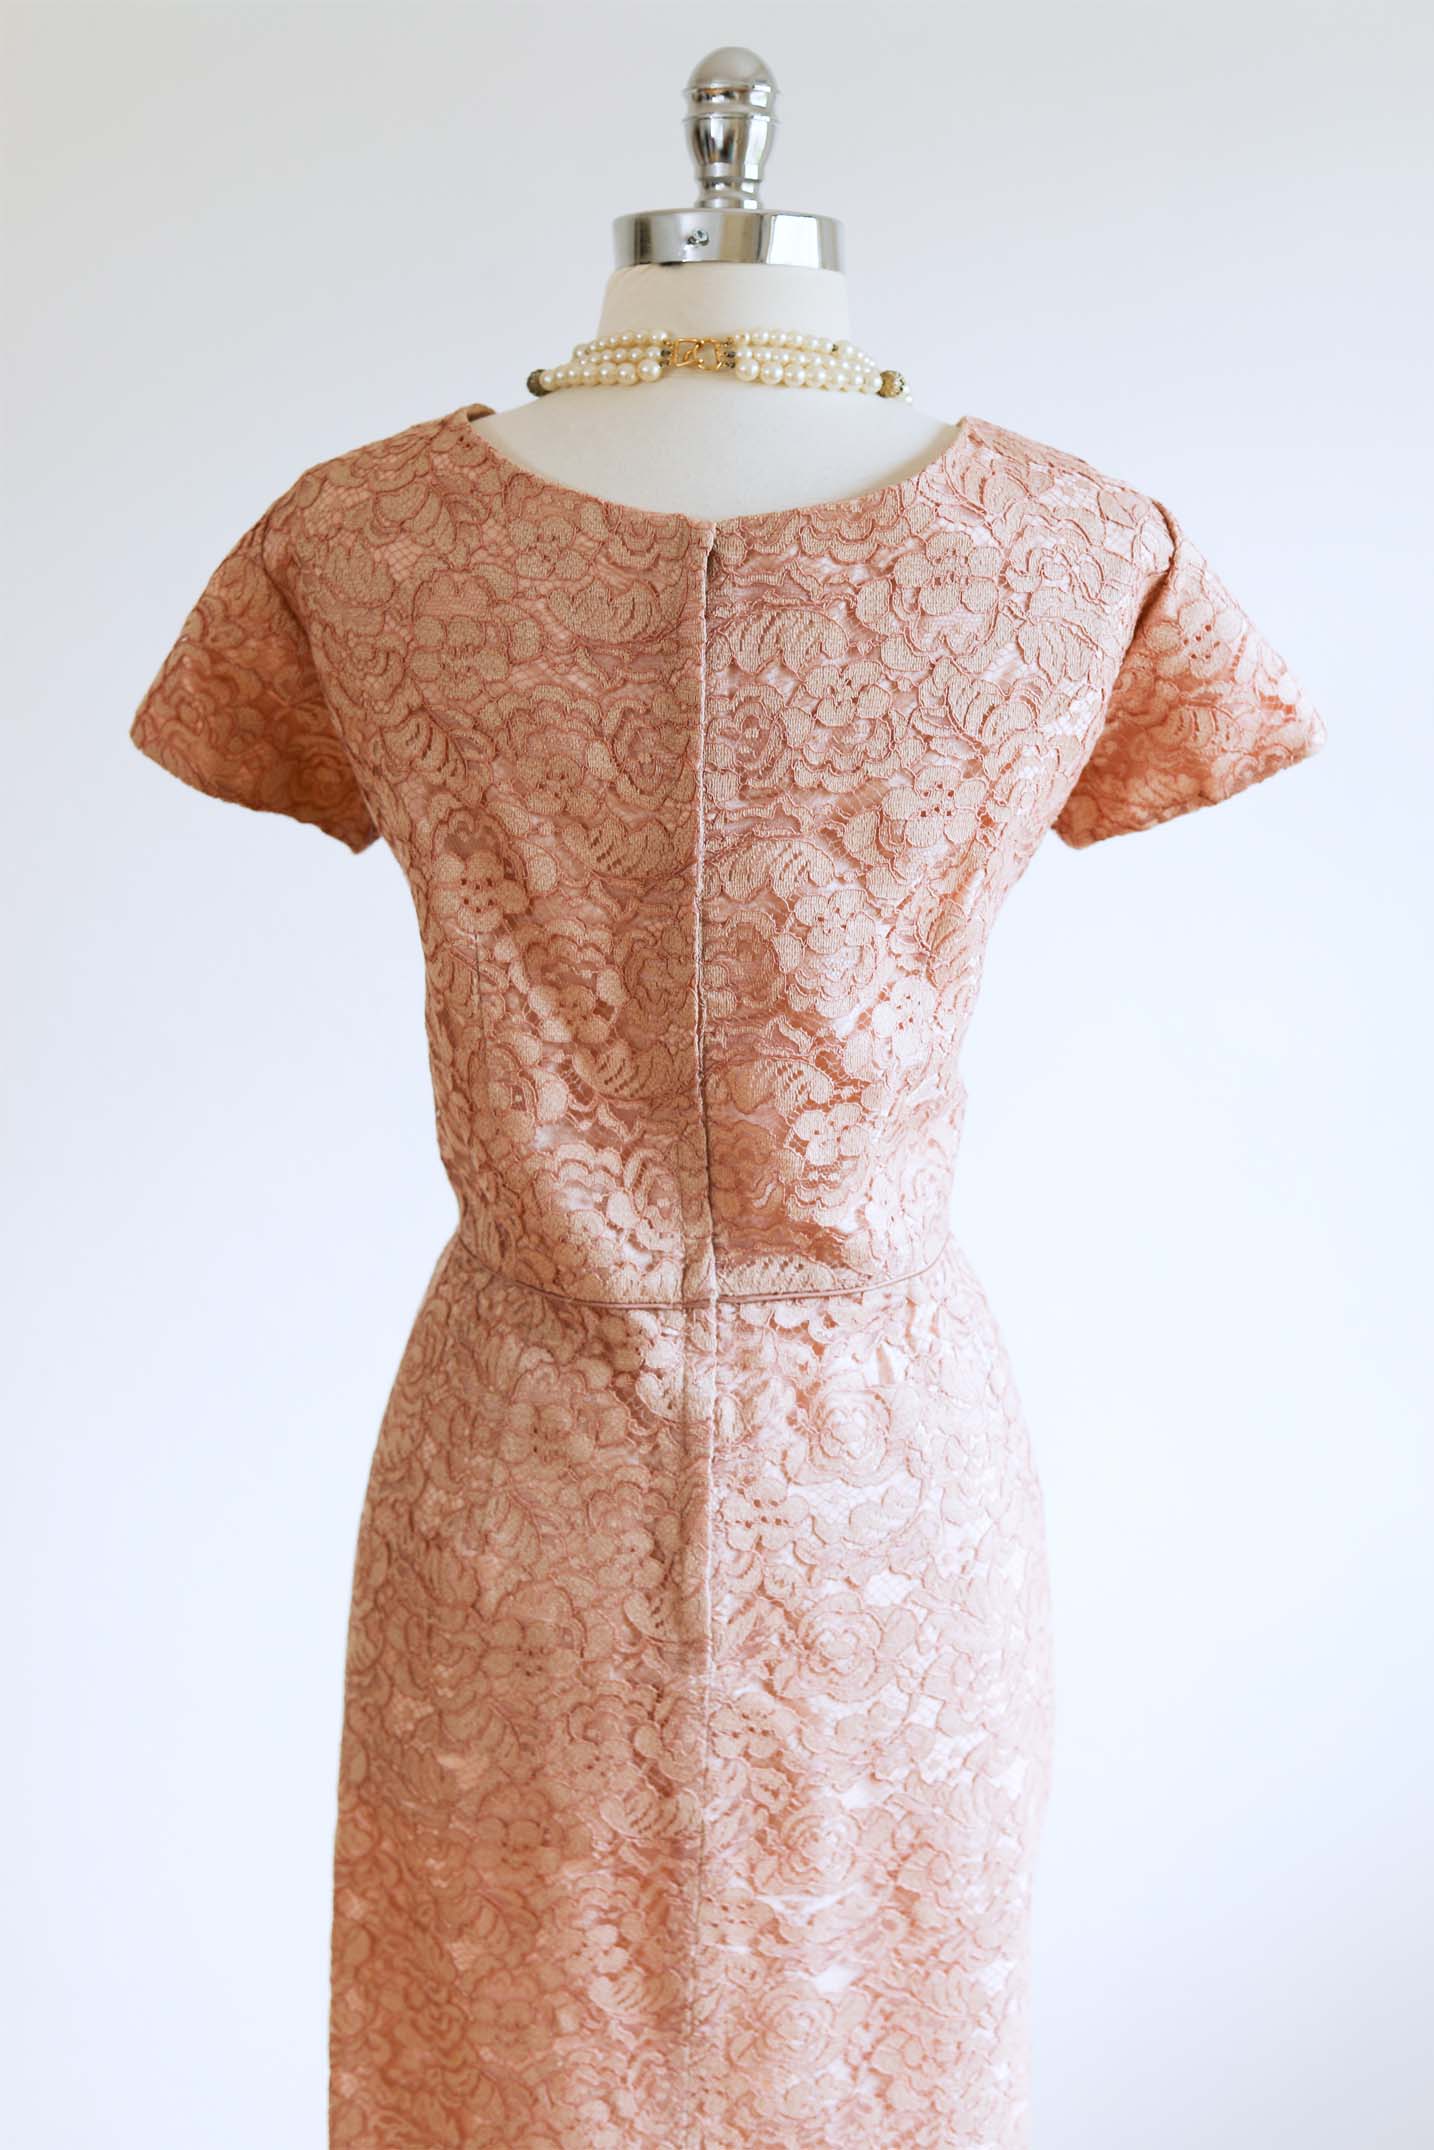 Vintage 1950s Dress - Blue + Olive Dahlia Summer Print Cotton Sundress w Caged Neckline Size M